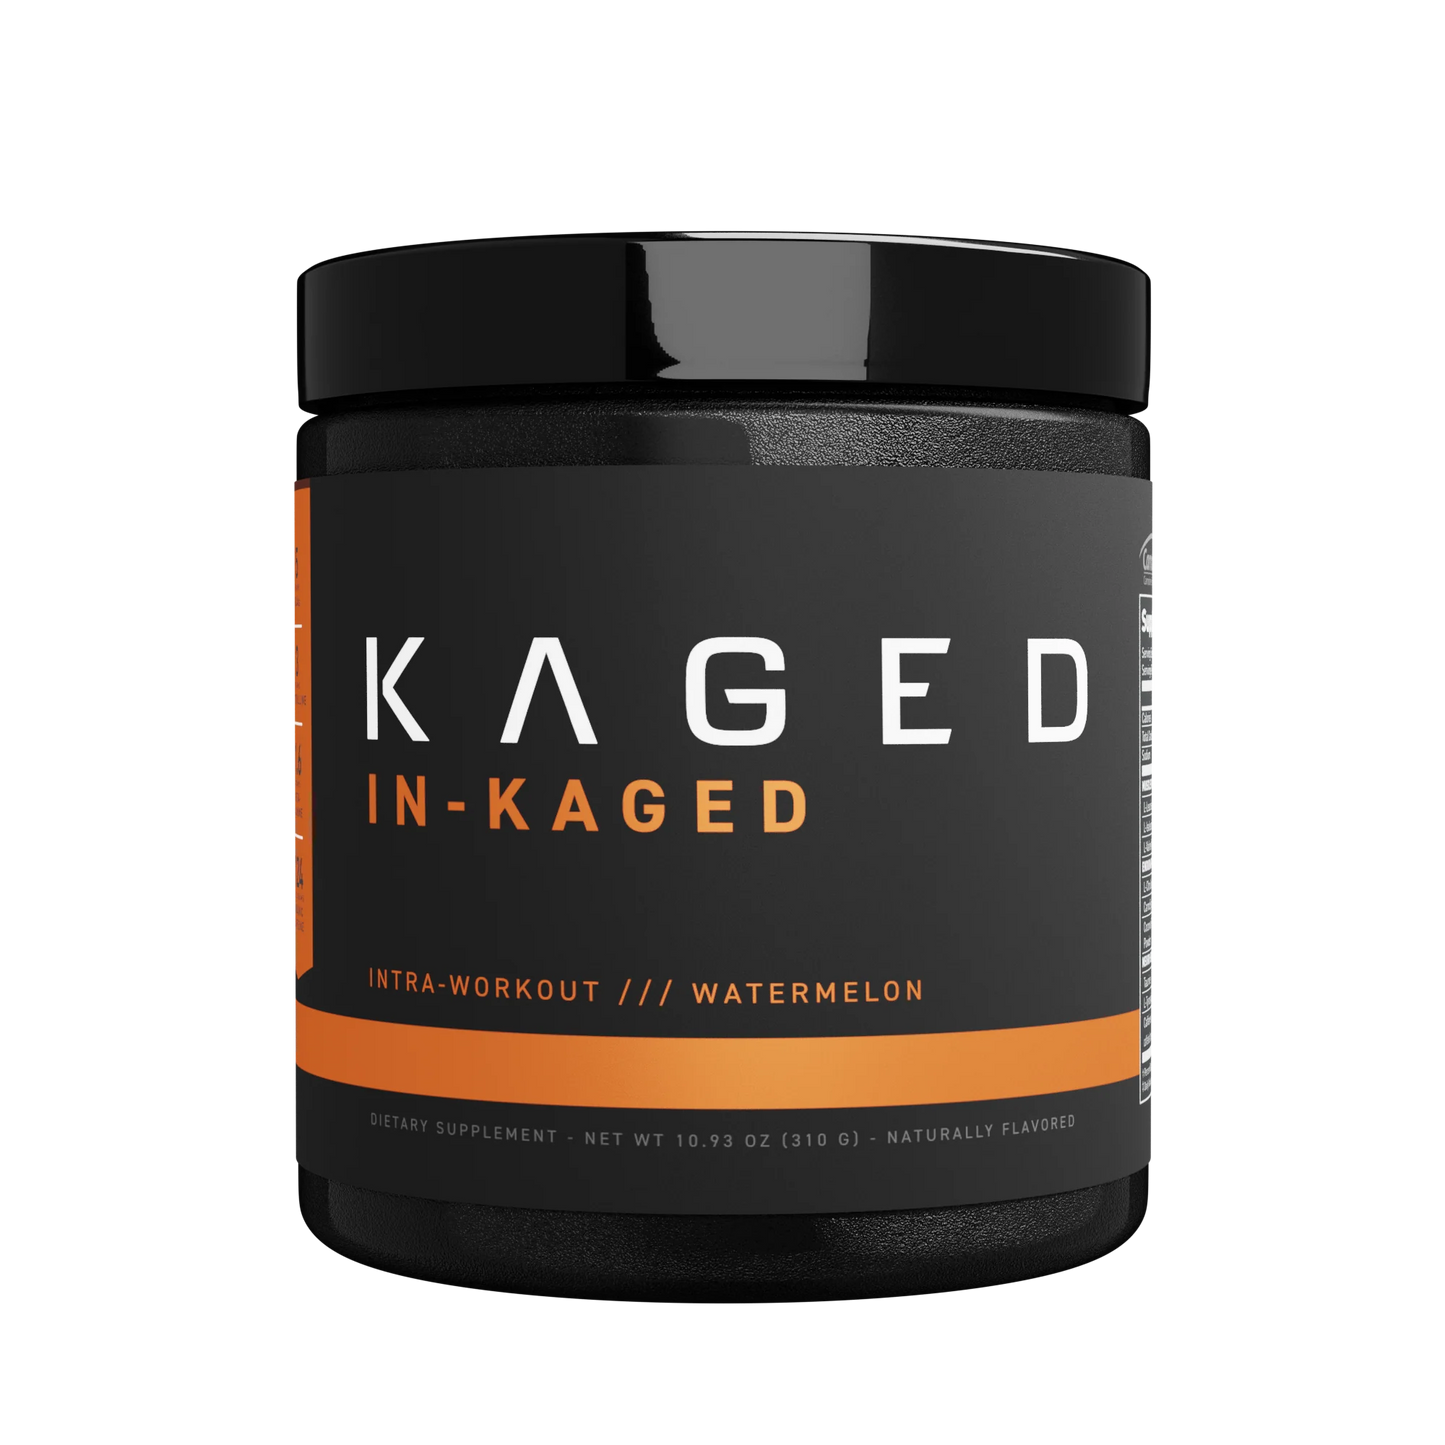 KAGED In-Kaged Intra-workout Powder